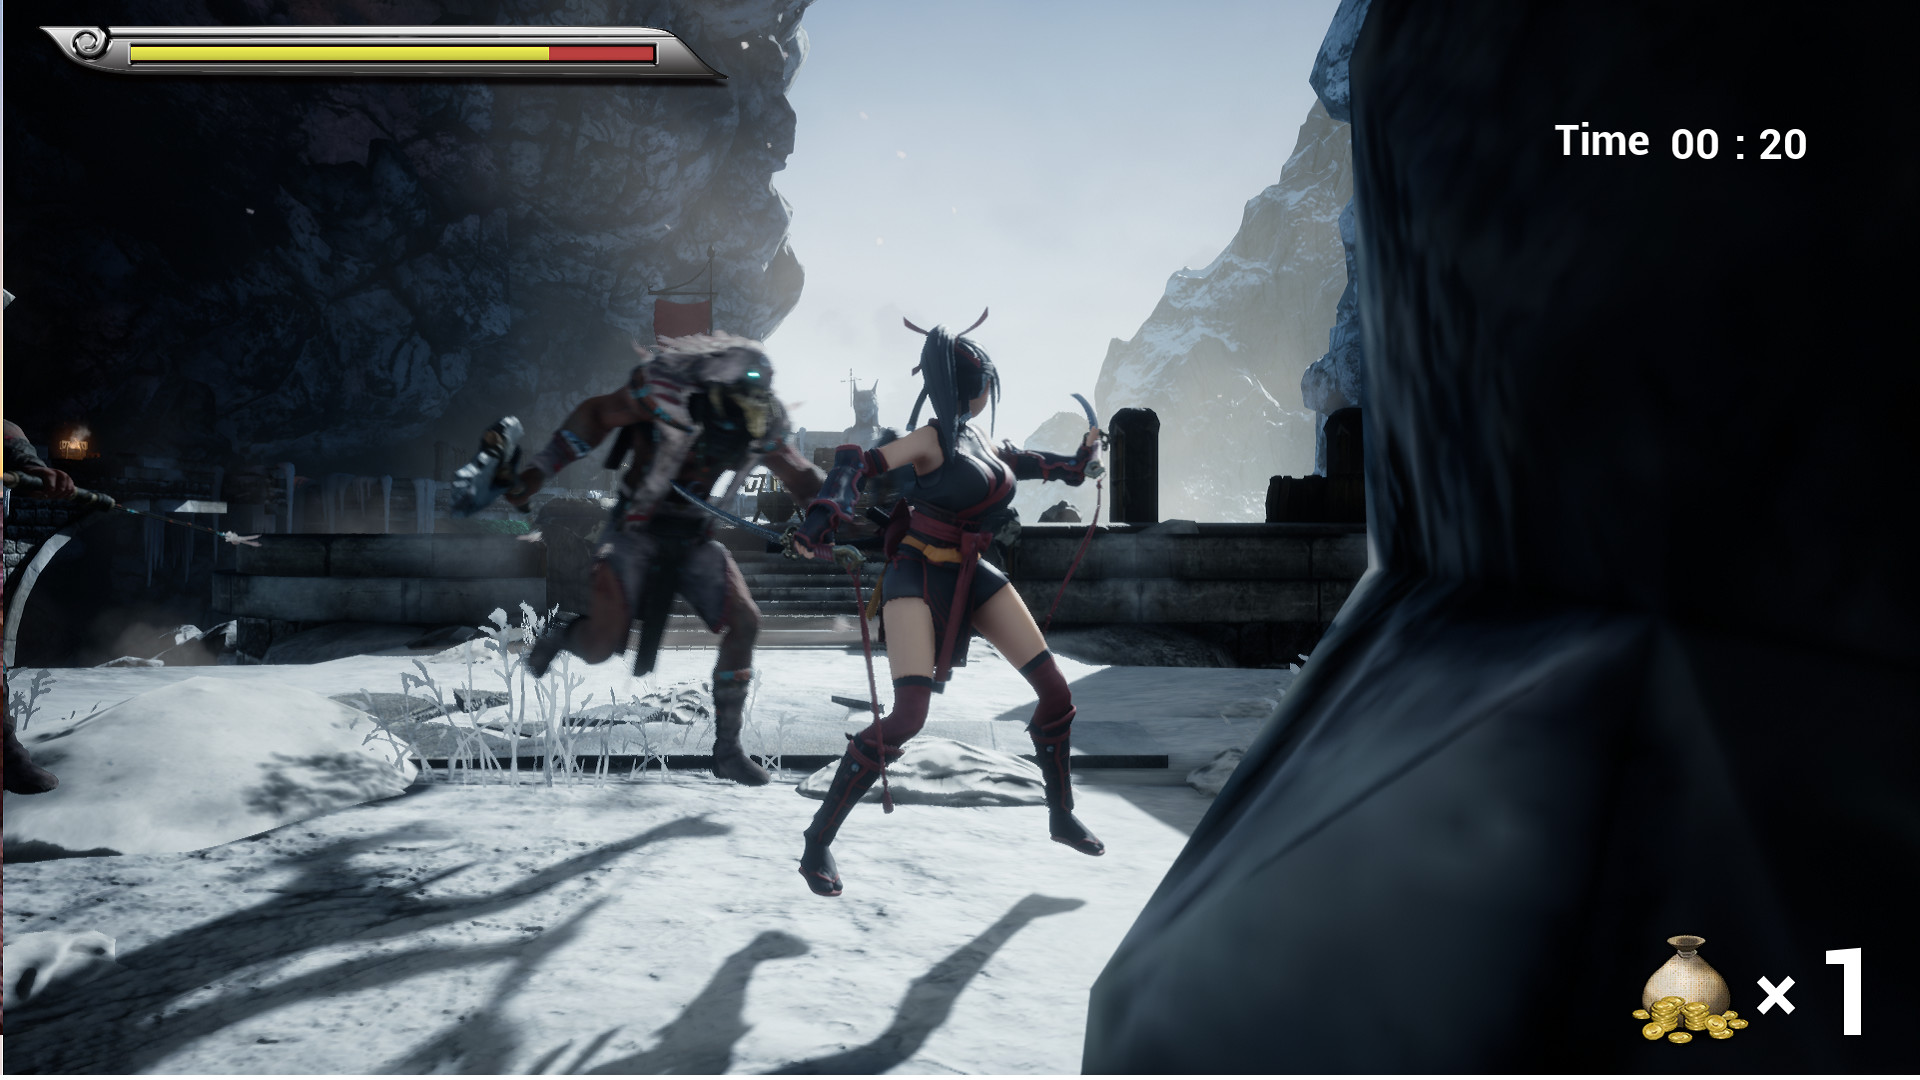 Dual Blade ~ Battle of The Female Ninja ~ Free Download